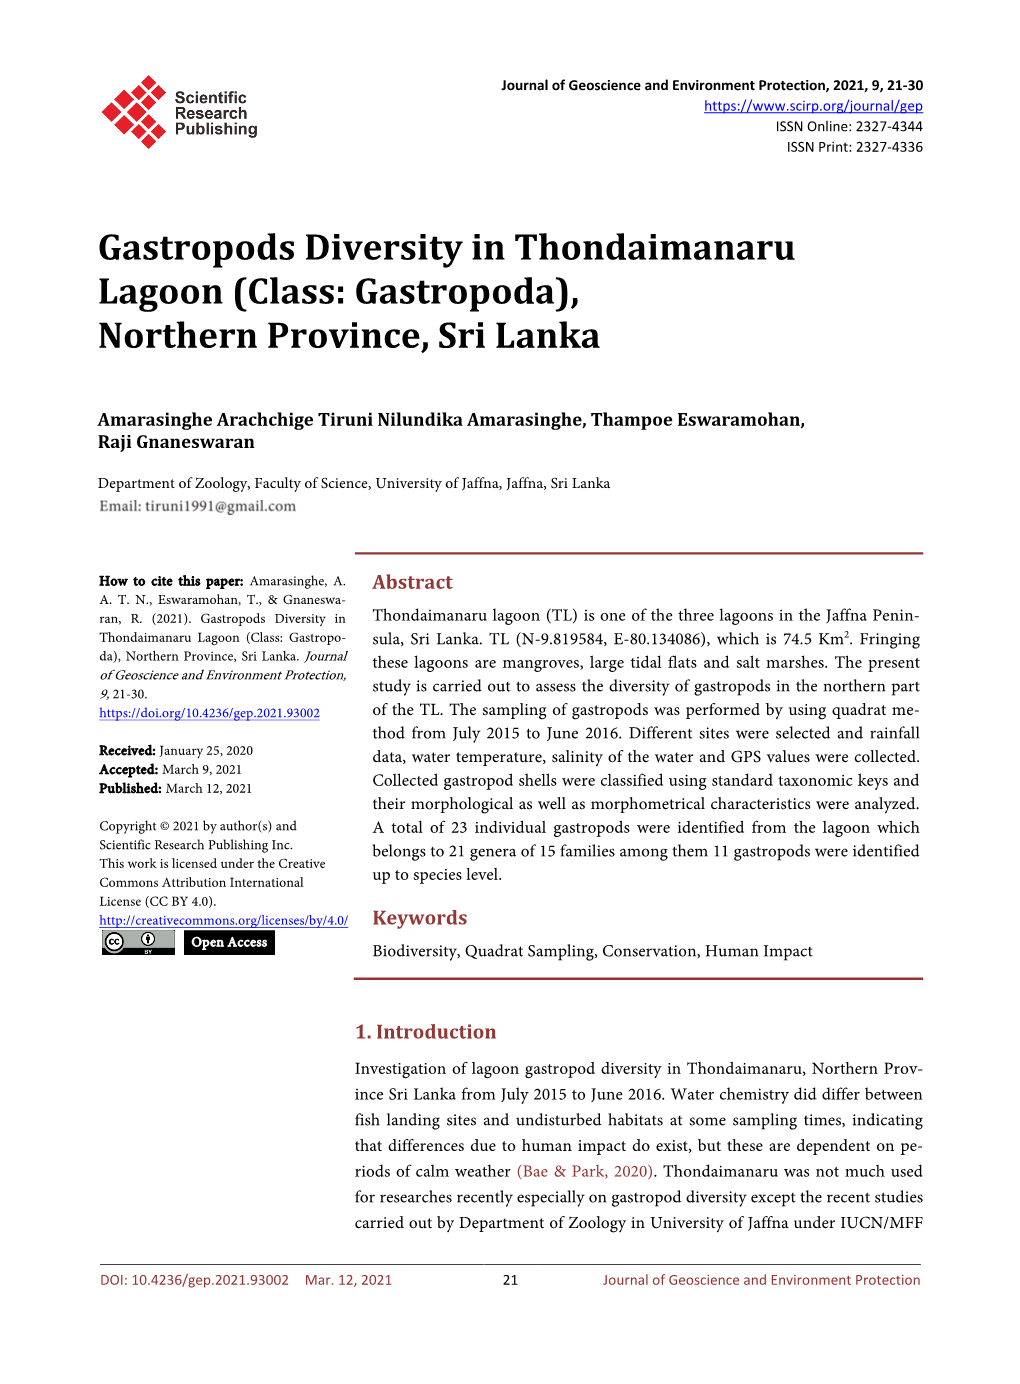 Gastropods Diversity in Thondaimanaru Lagoon (Class: Gastropoda), Northern Province, Sri Lanka